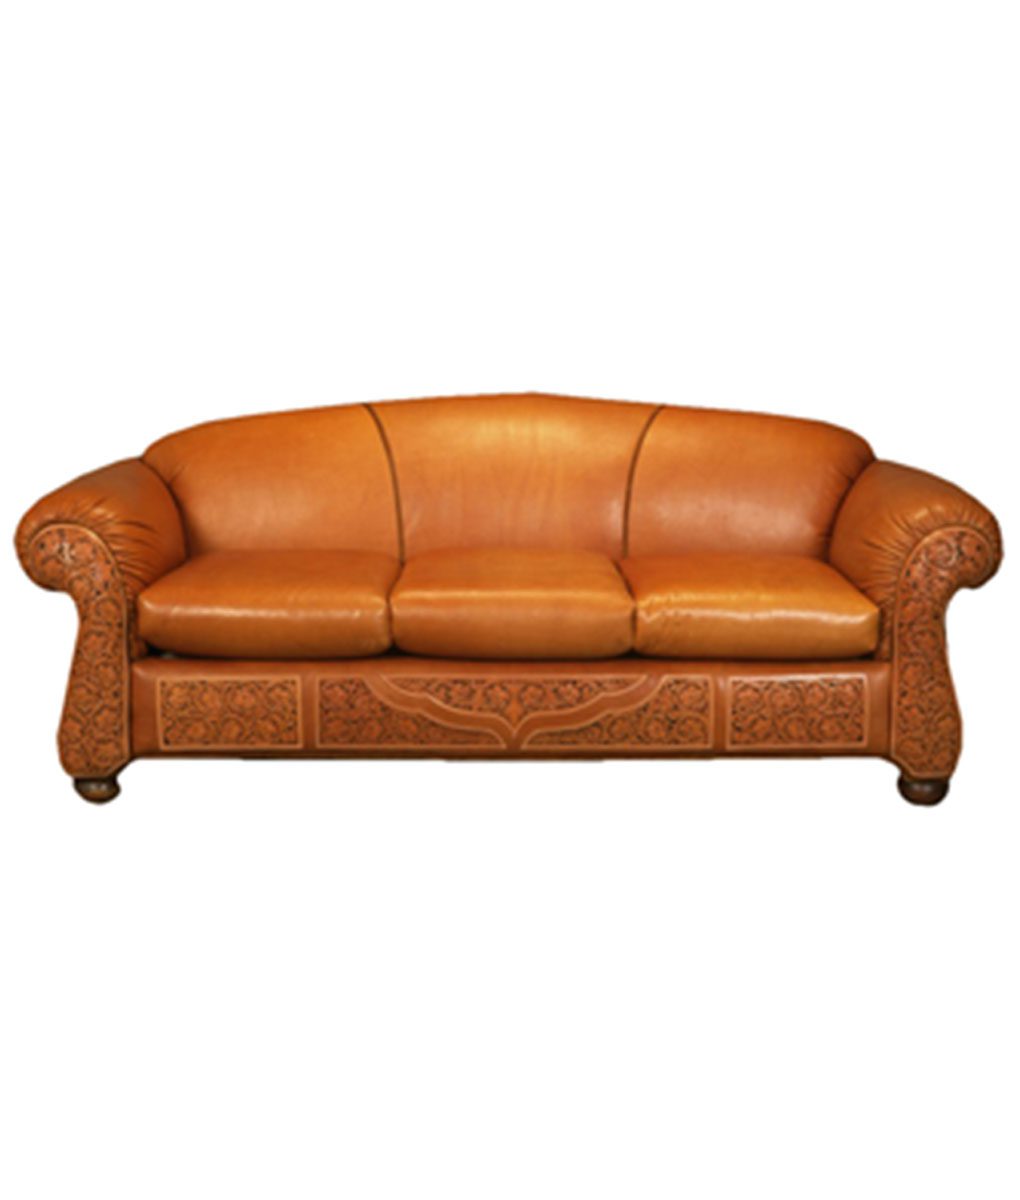 Tooled Leather Sofa Western, Leather Western Furniture